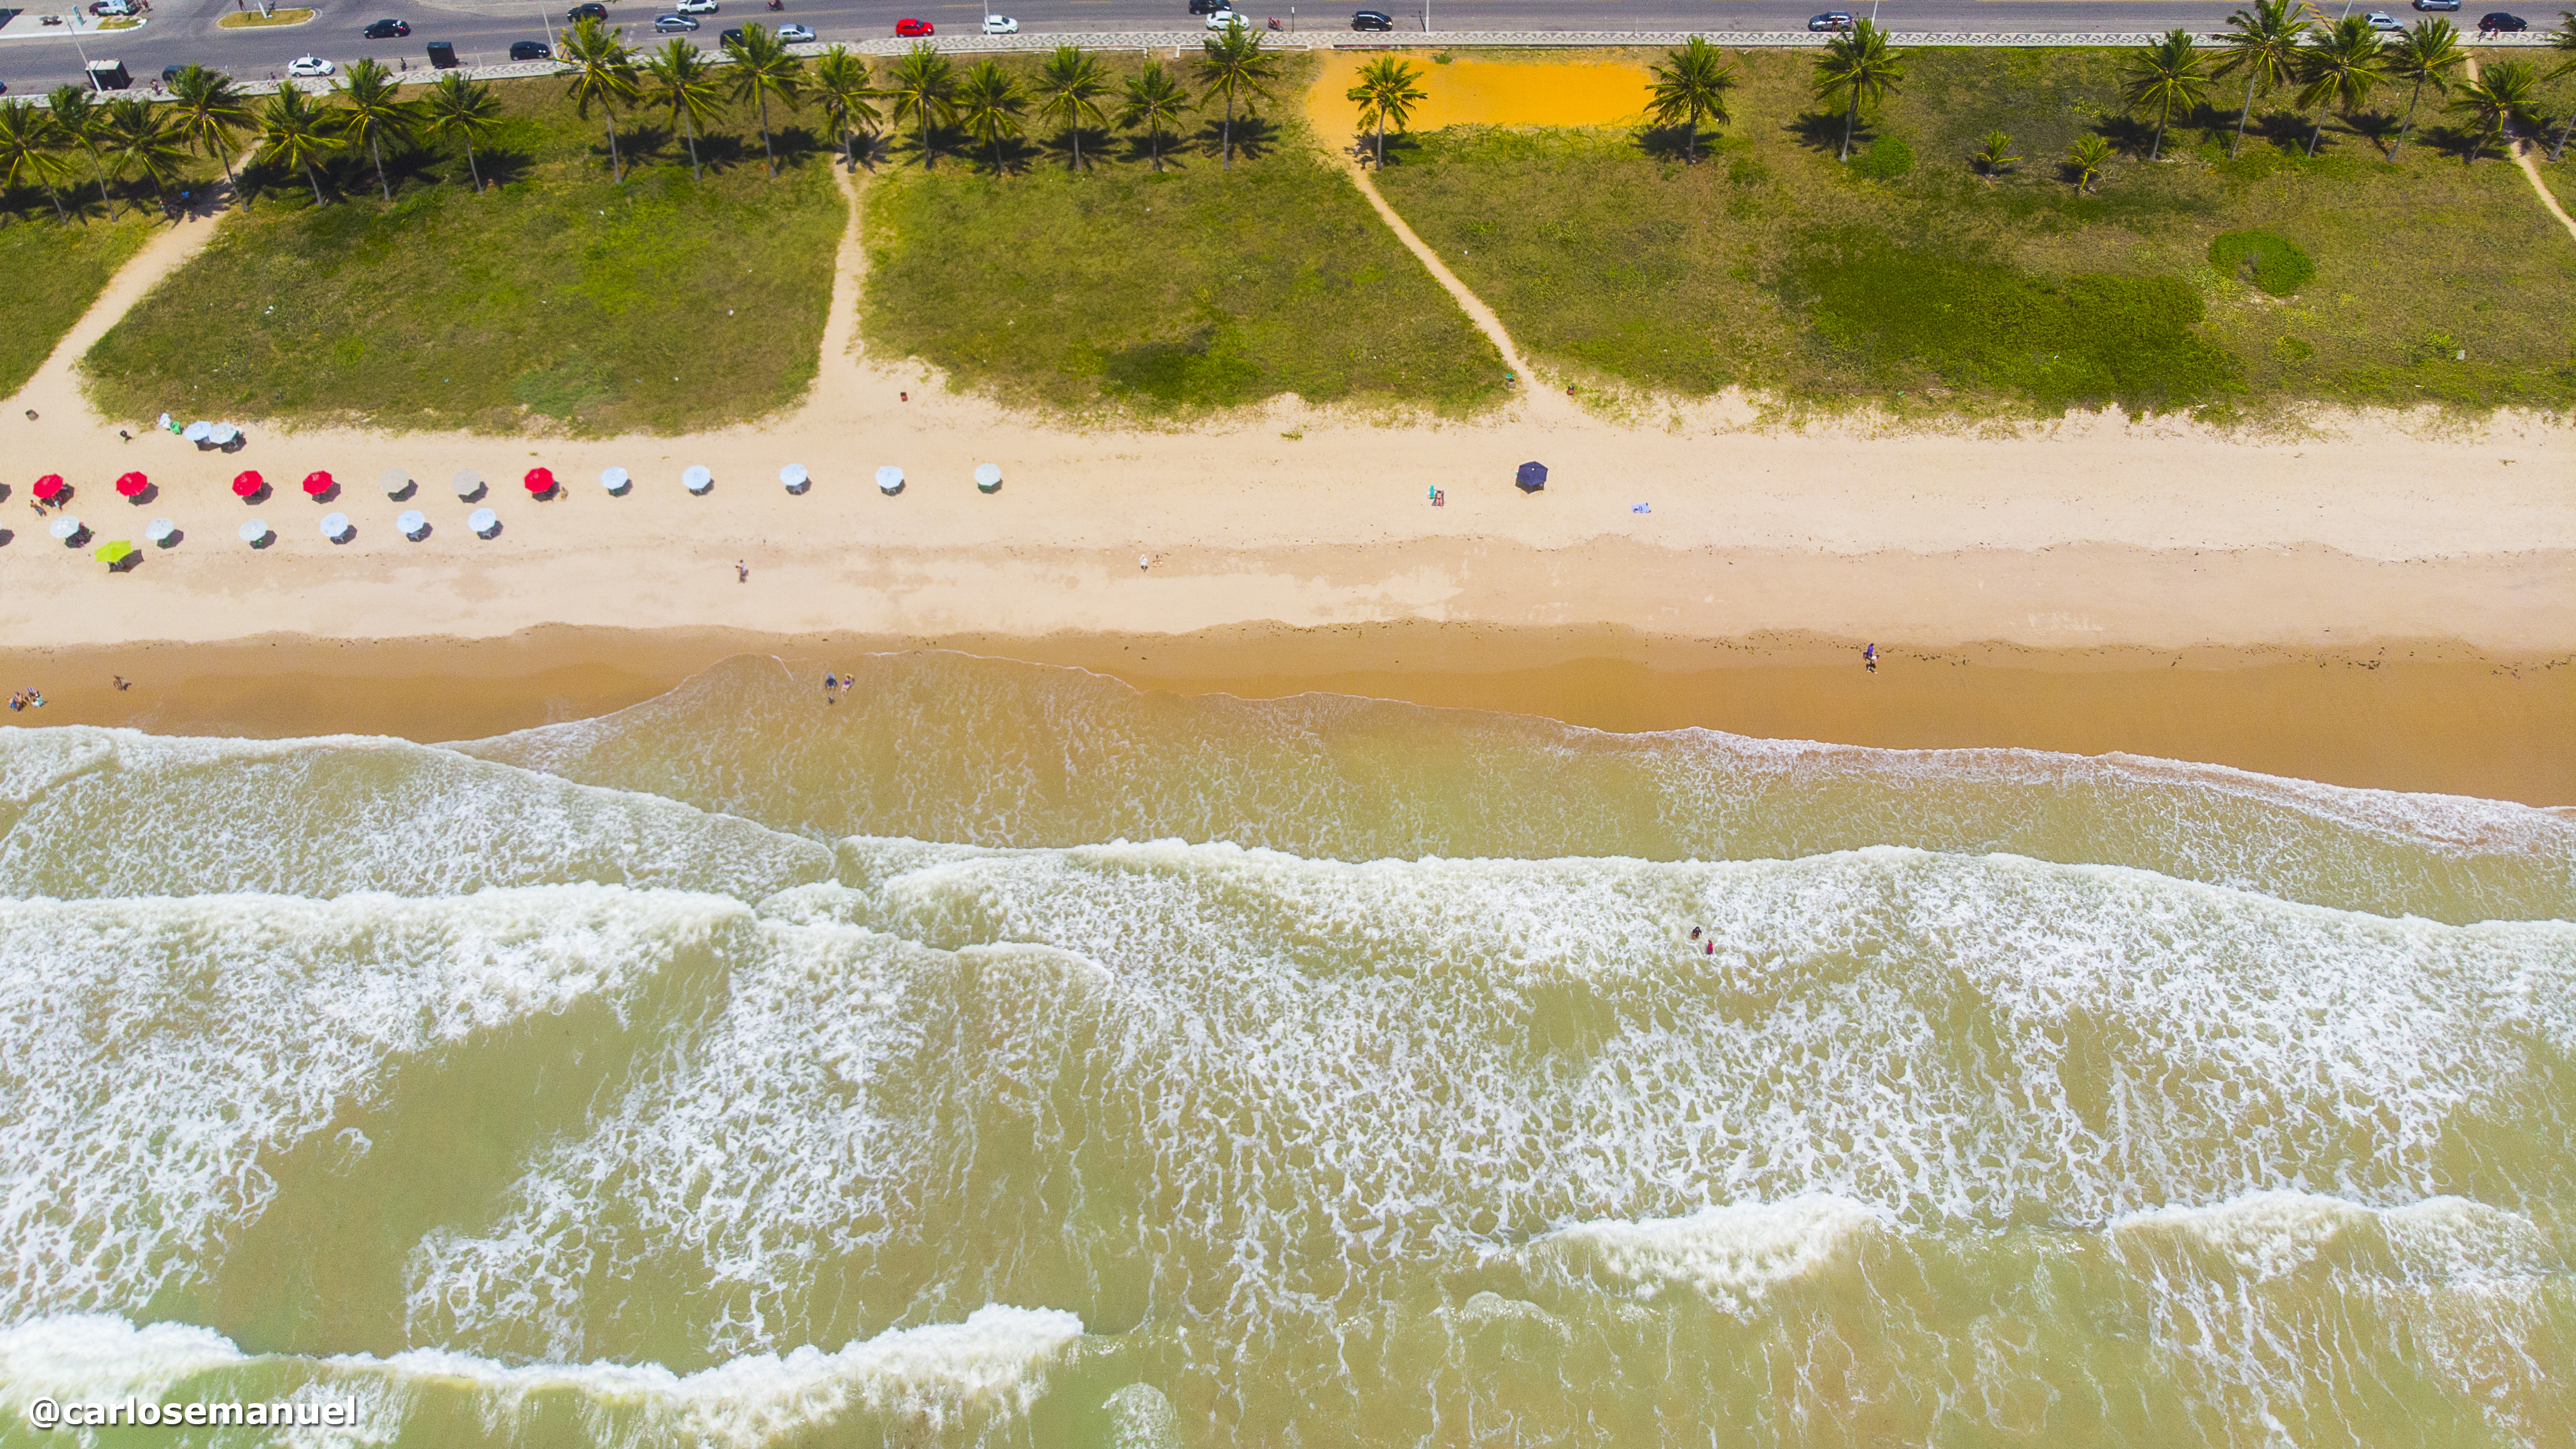 Beach Joao Pessoa Nature City Landscape Drone Drone Photo 4048x2277